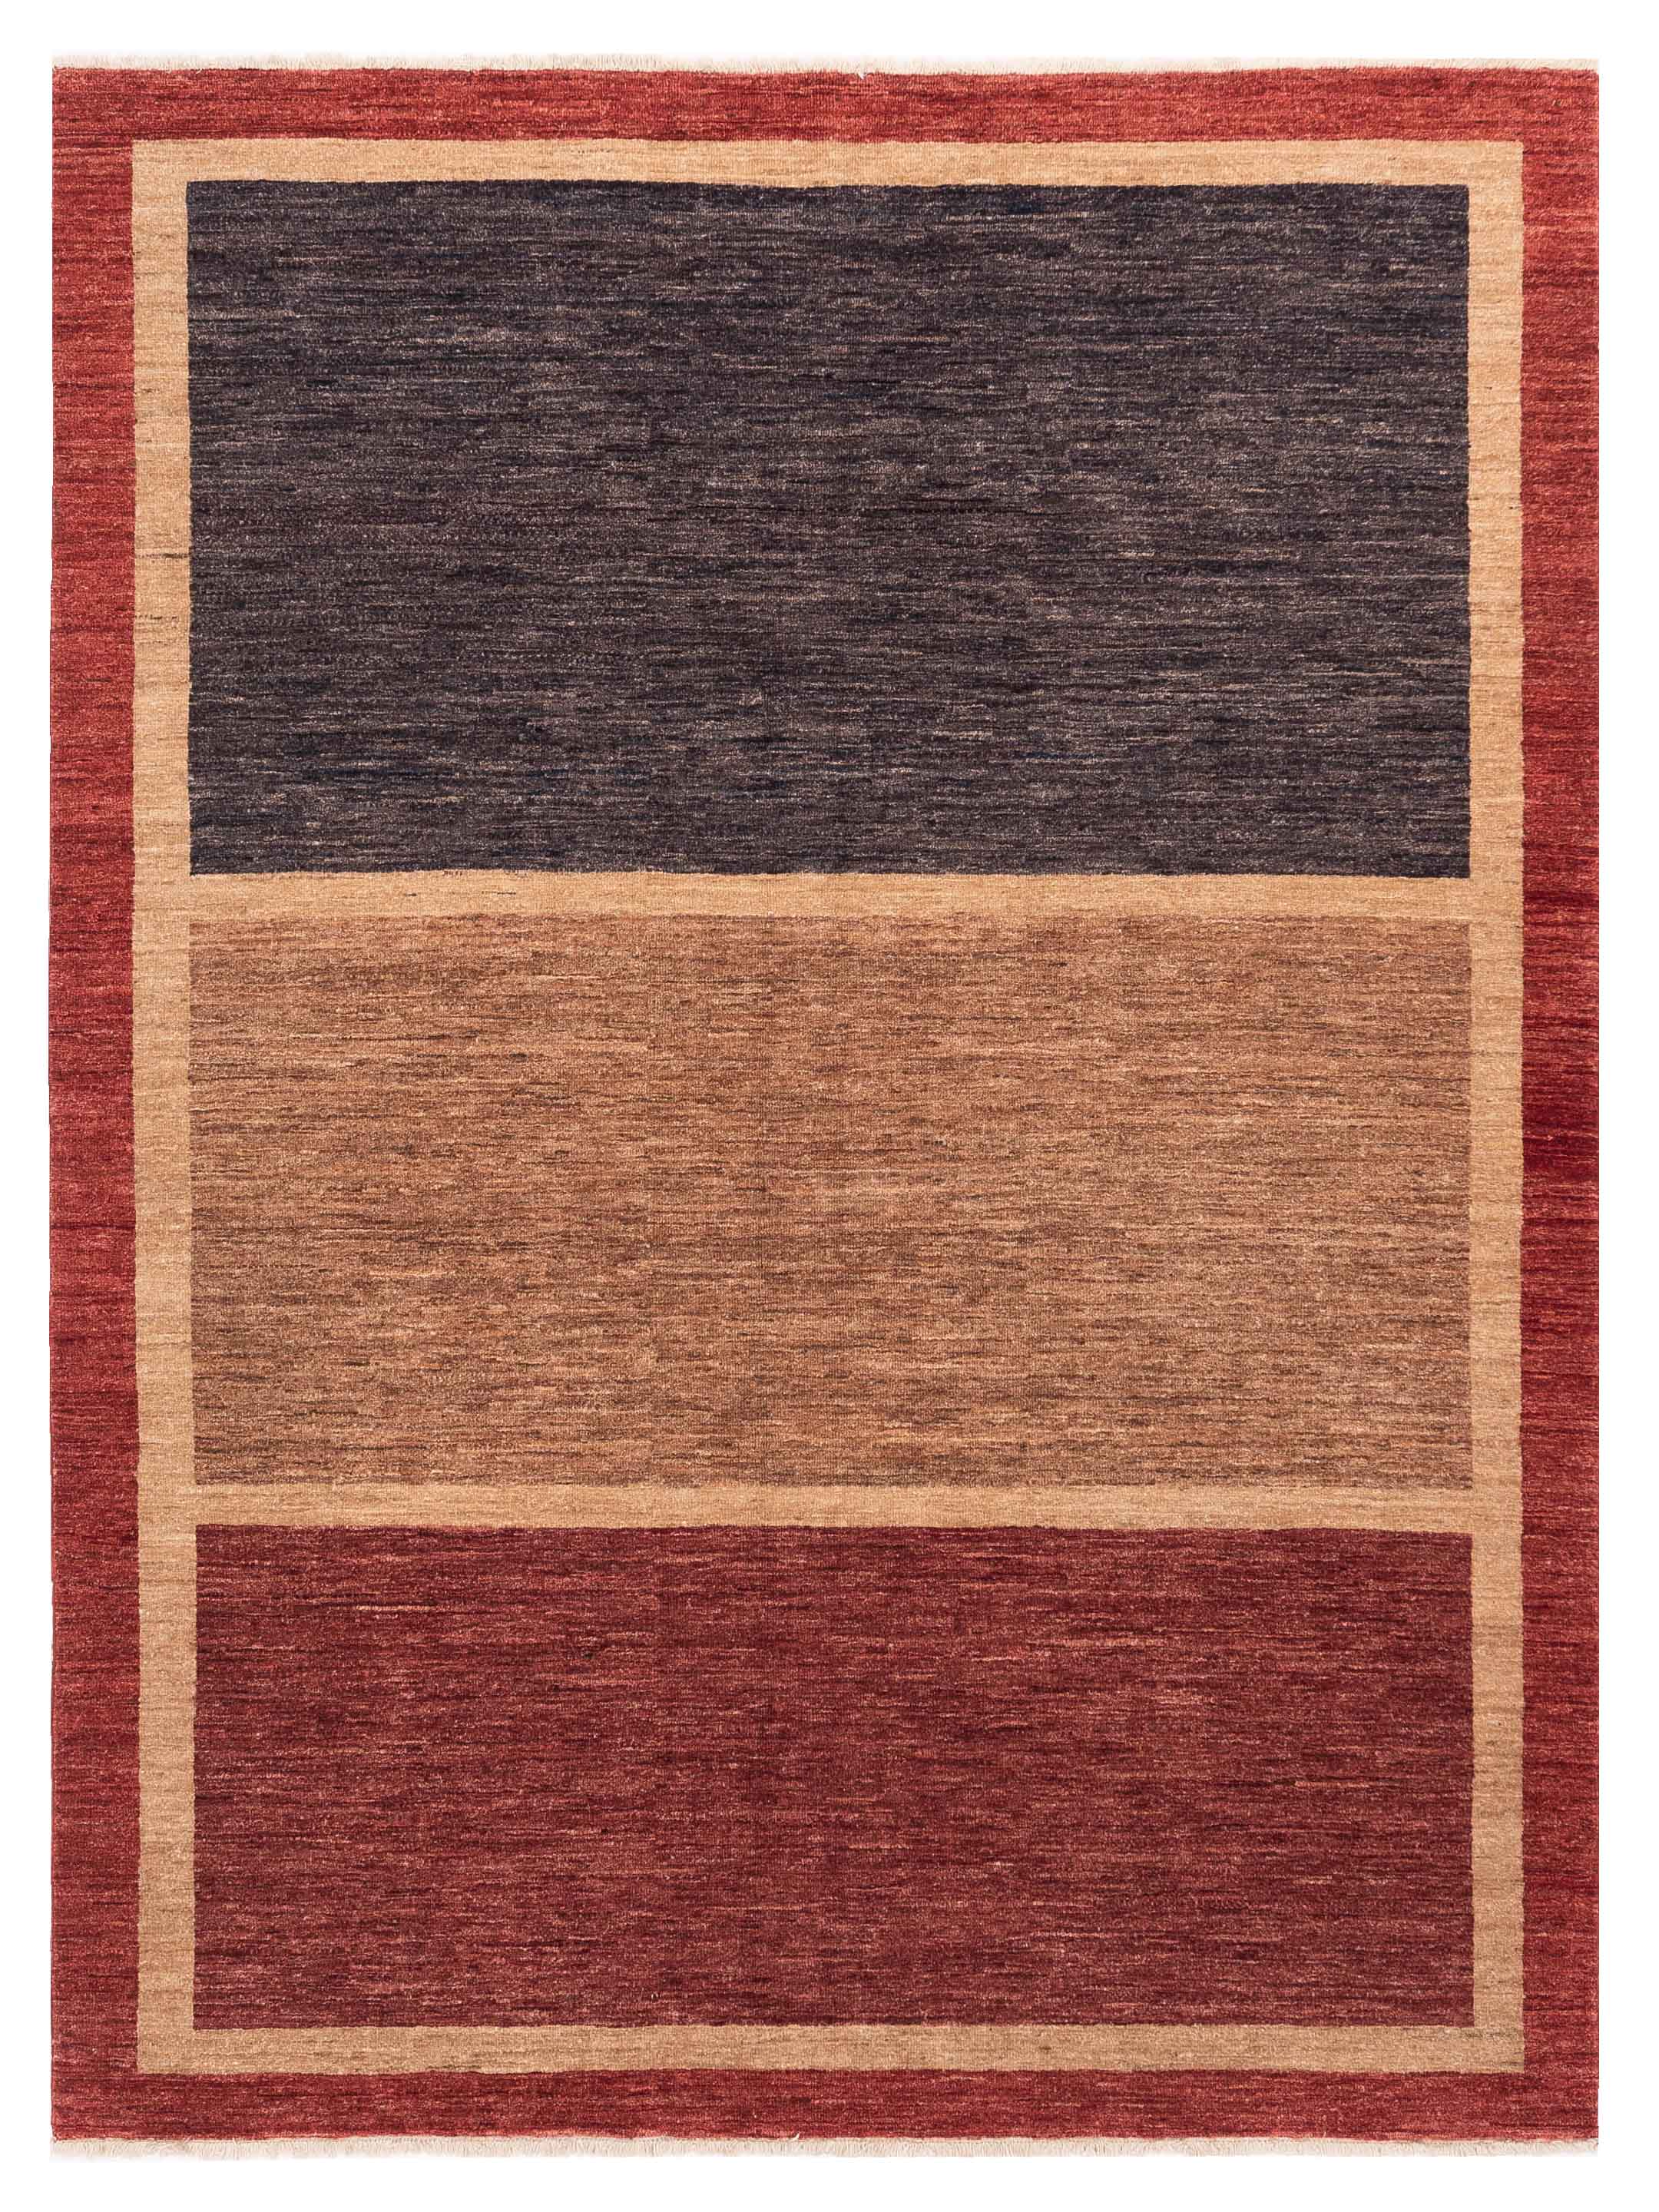 Tribal Multi color area rug	